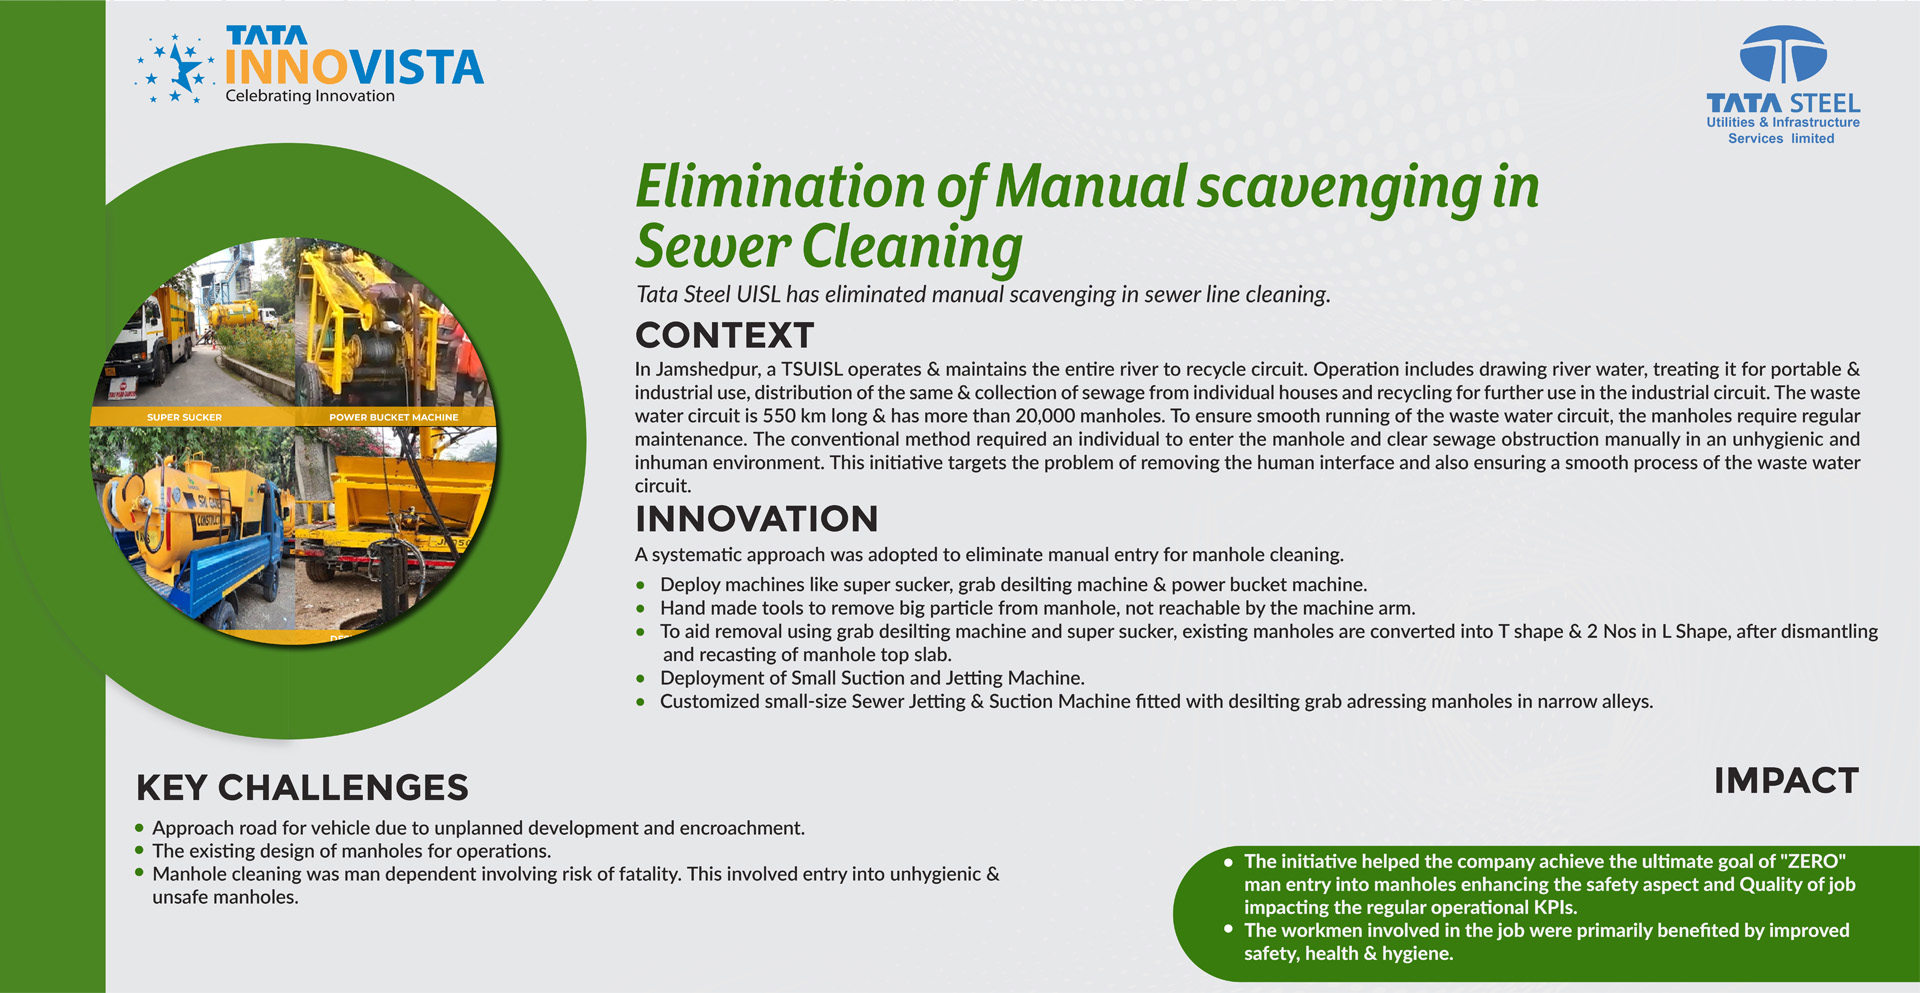 Tata Steel UISL- Elimination of Manual Scavenging